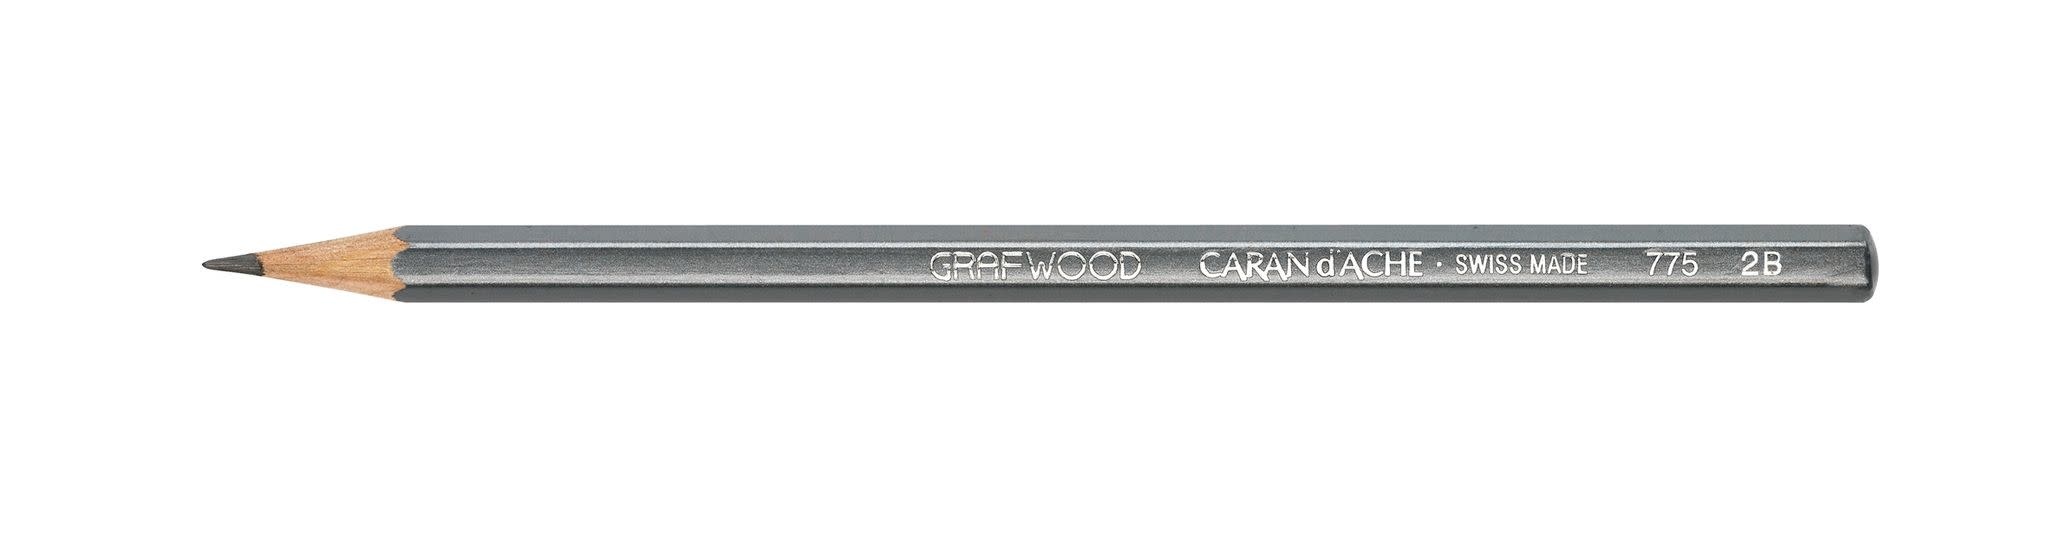 Caran dAche Grafwood Pencils and Sets